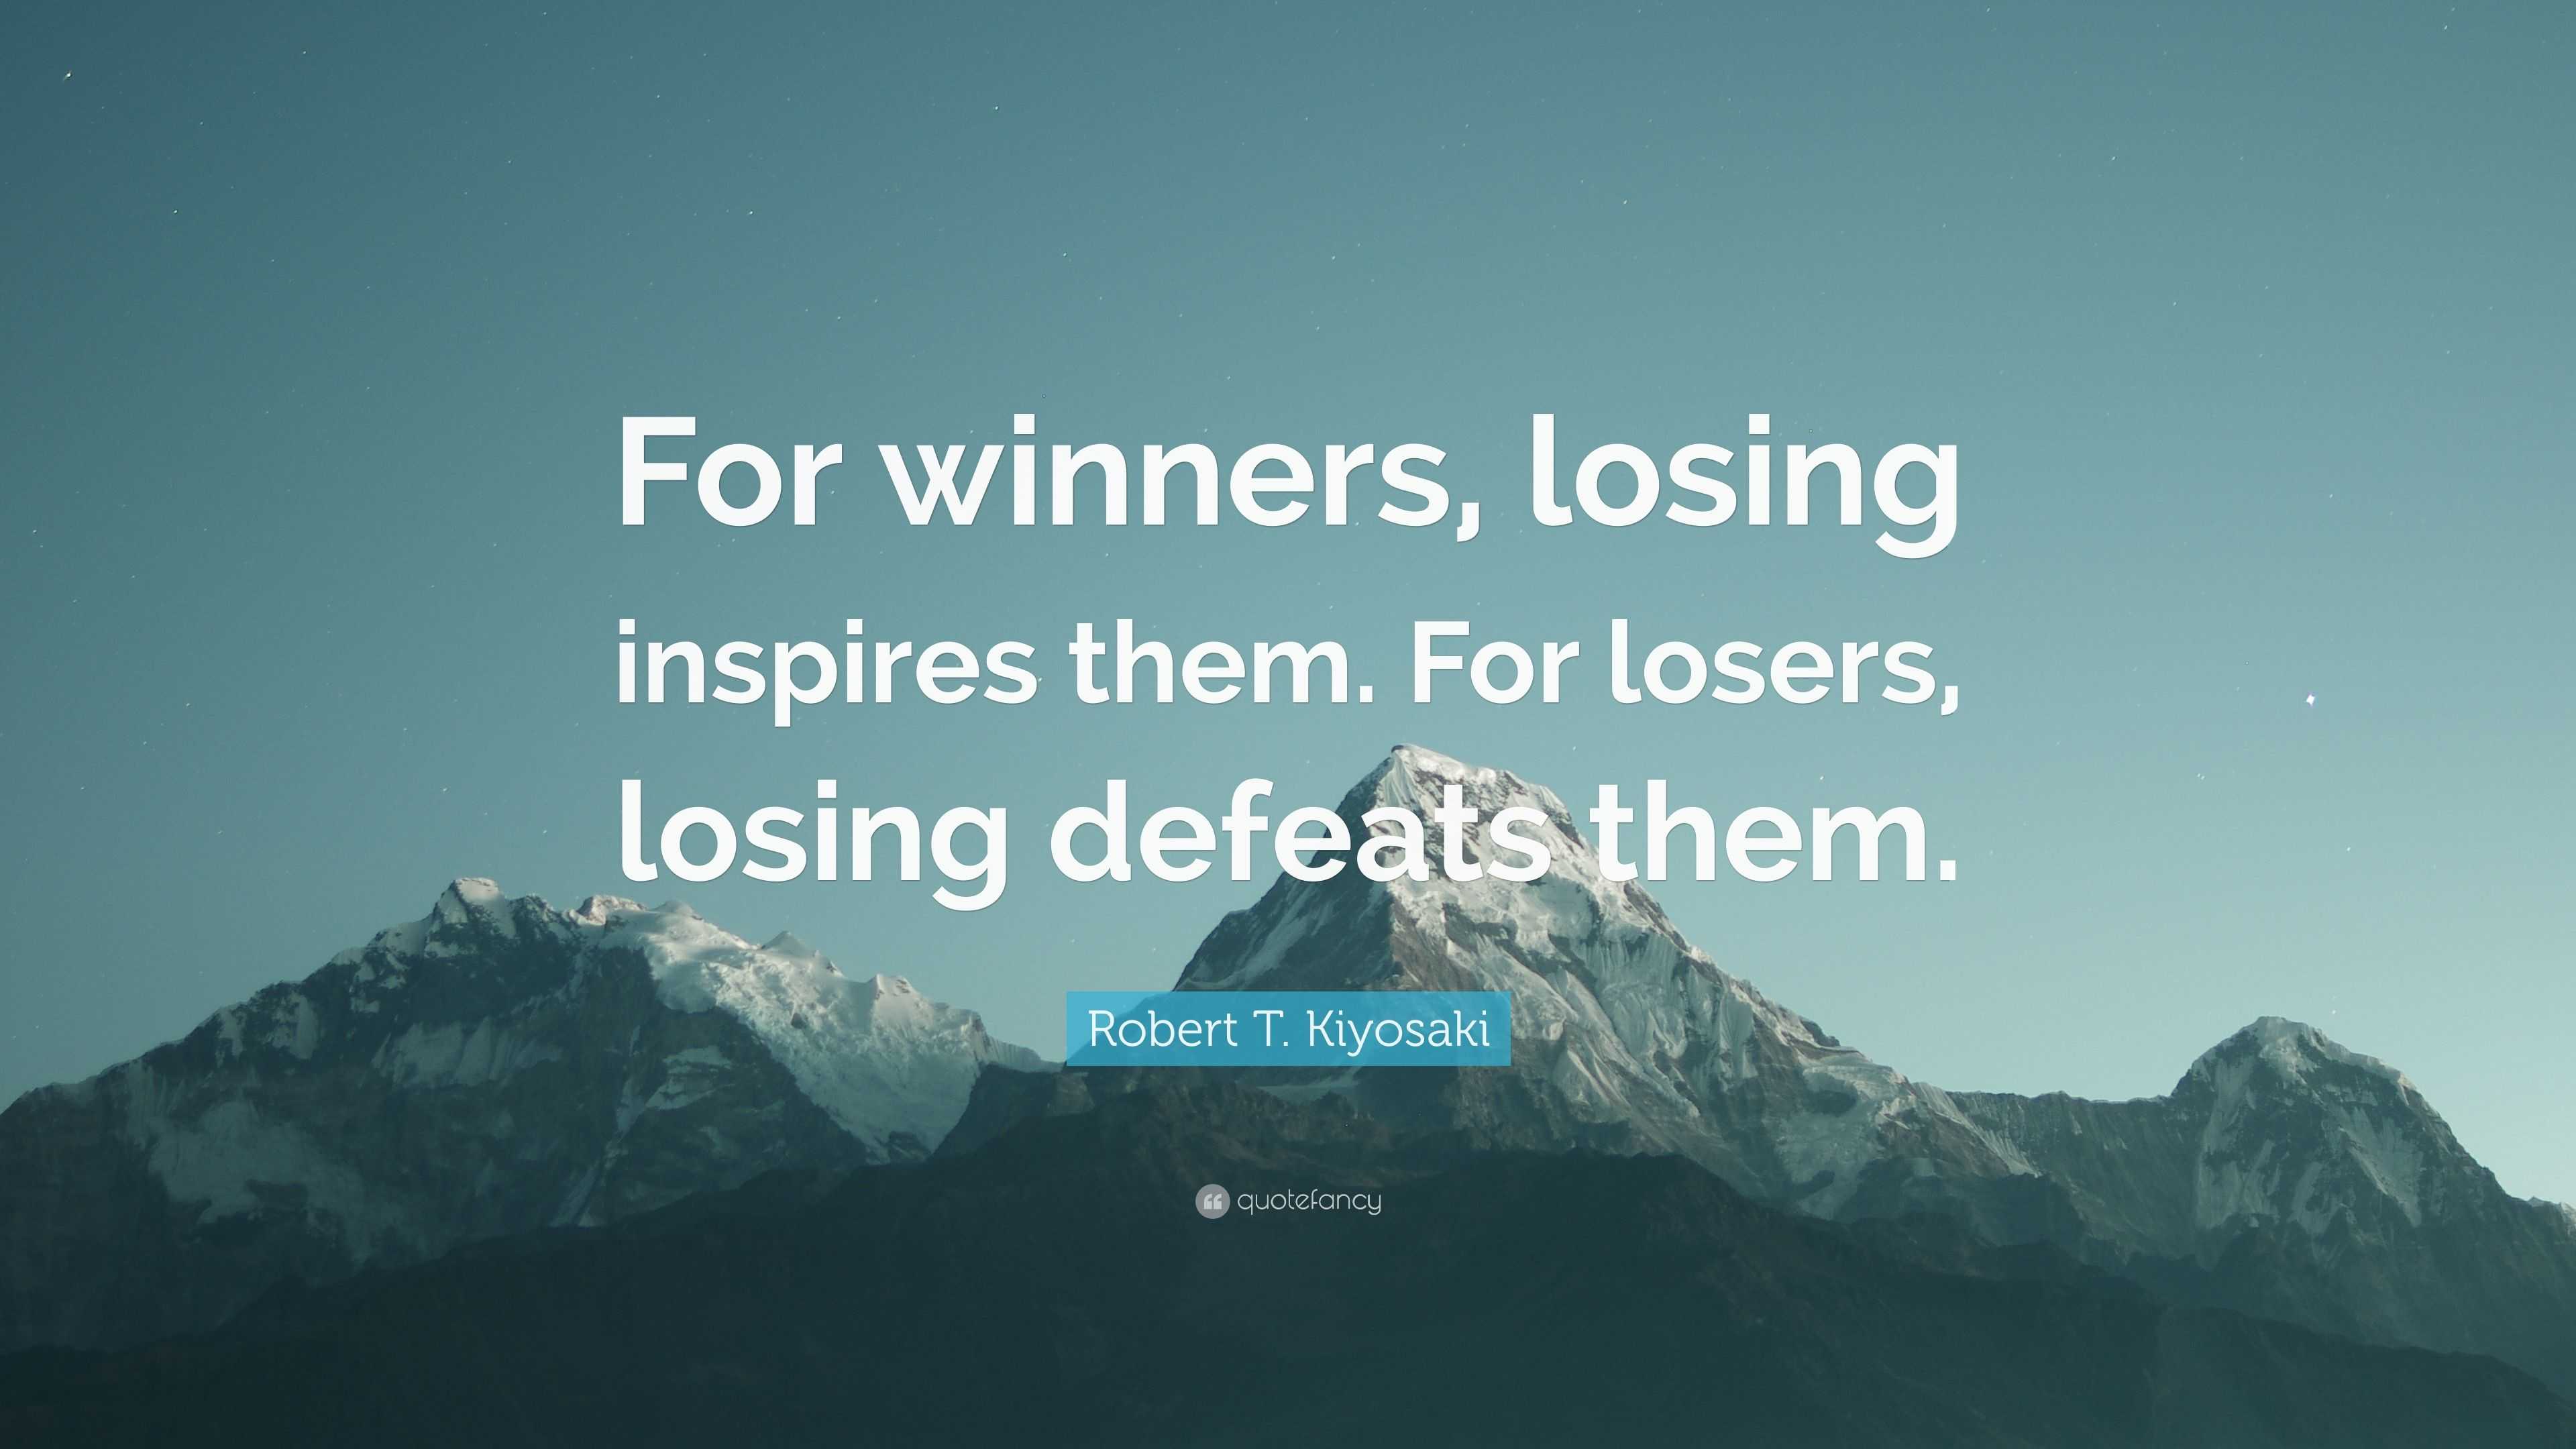 Robert T. Kiyosaki Quote: “For winners, losing inspires them. For